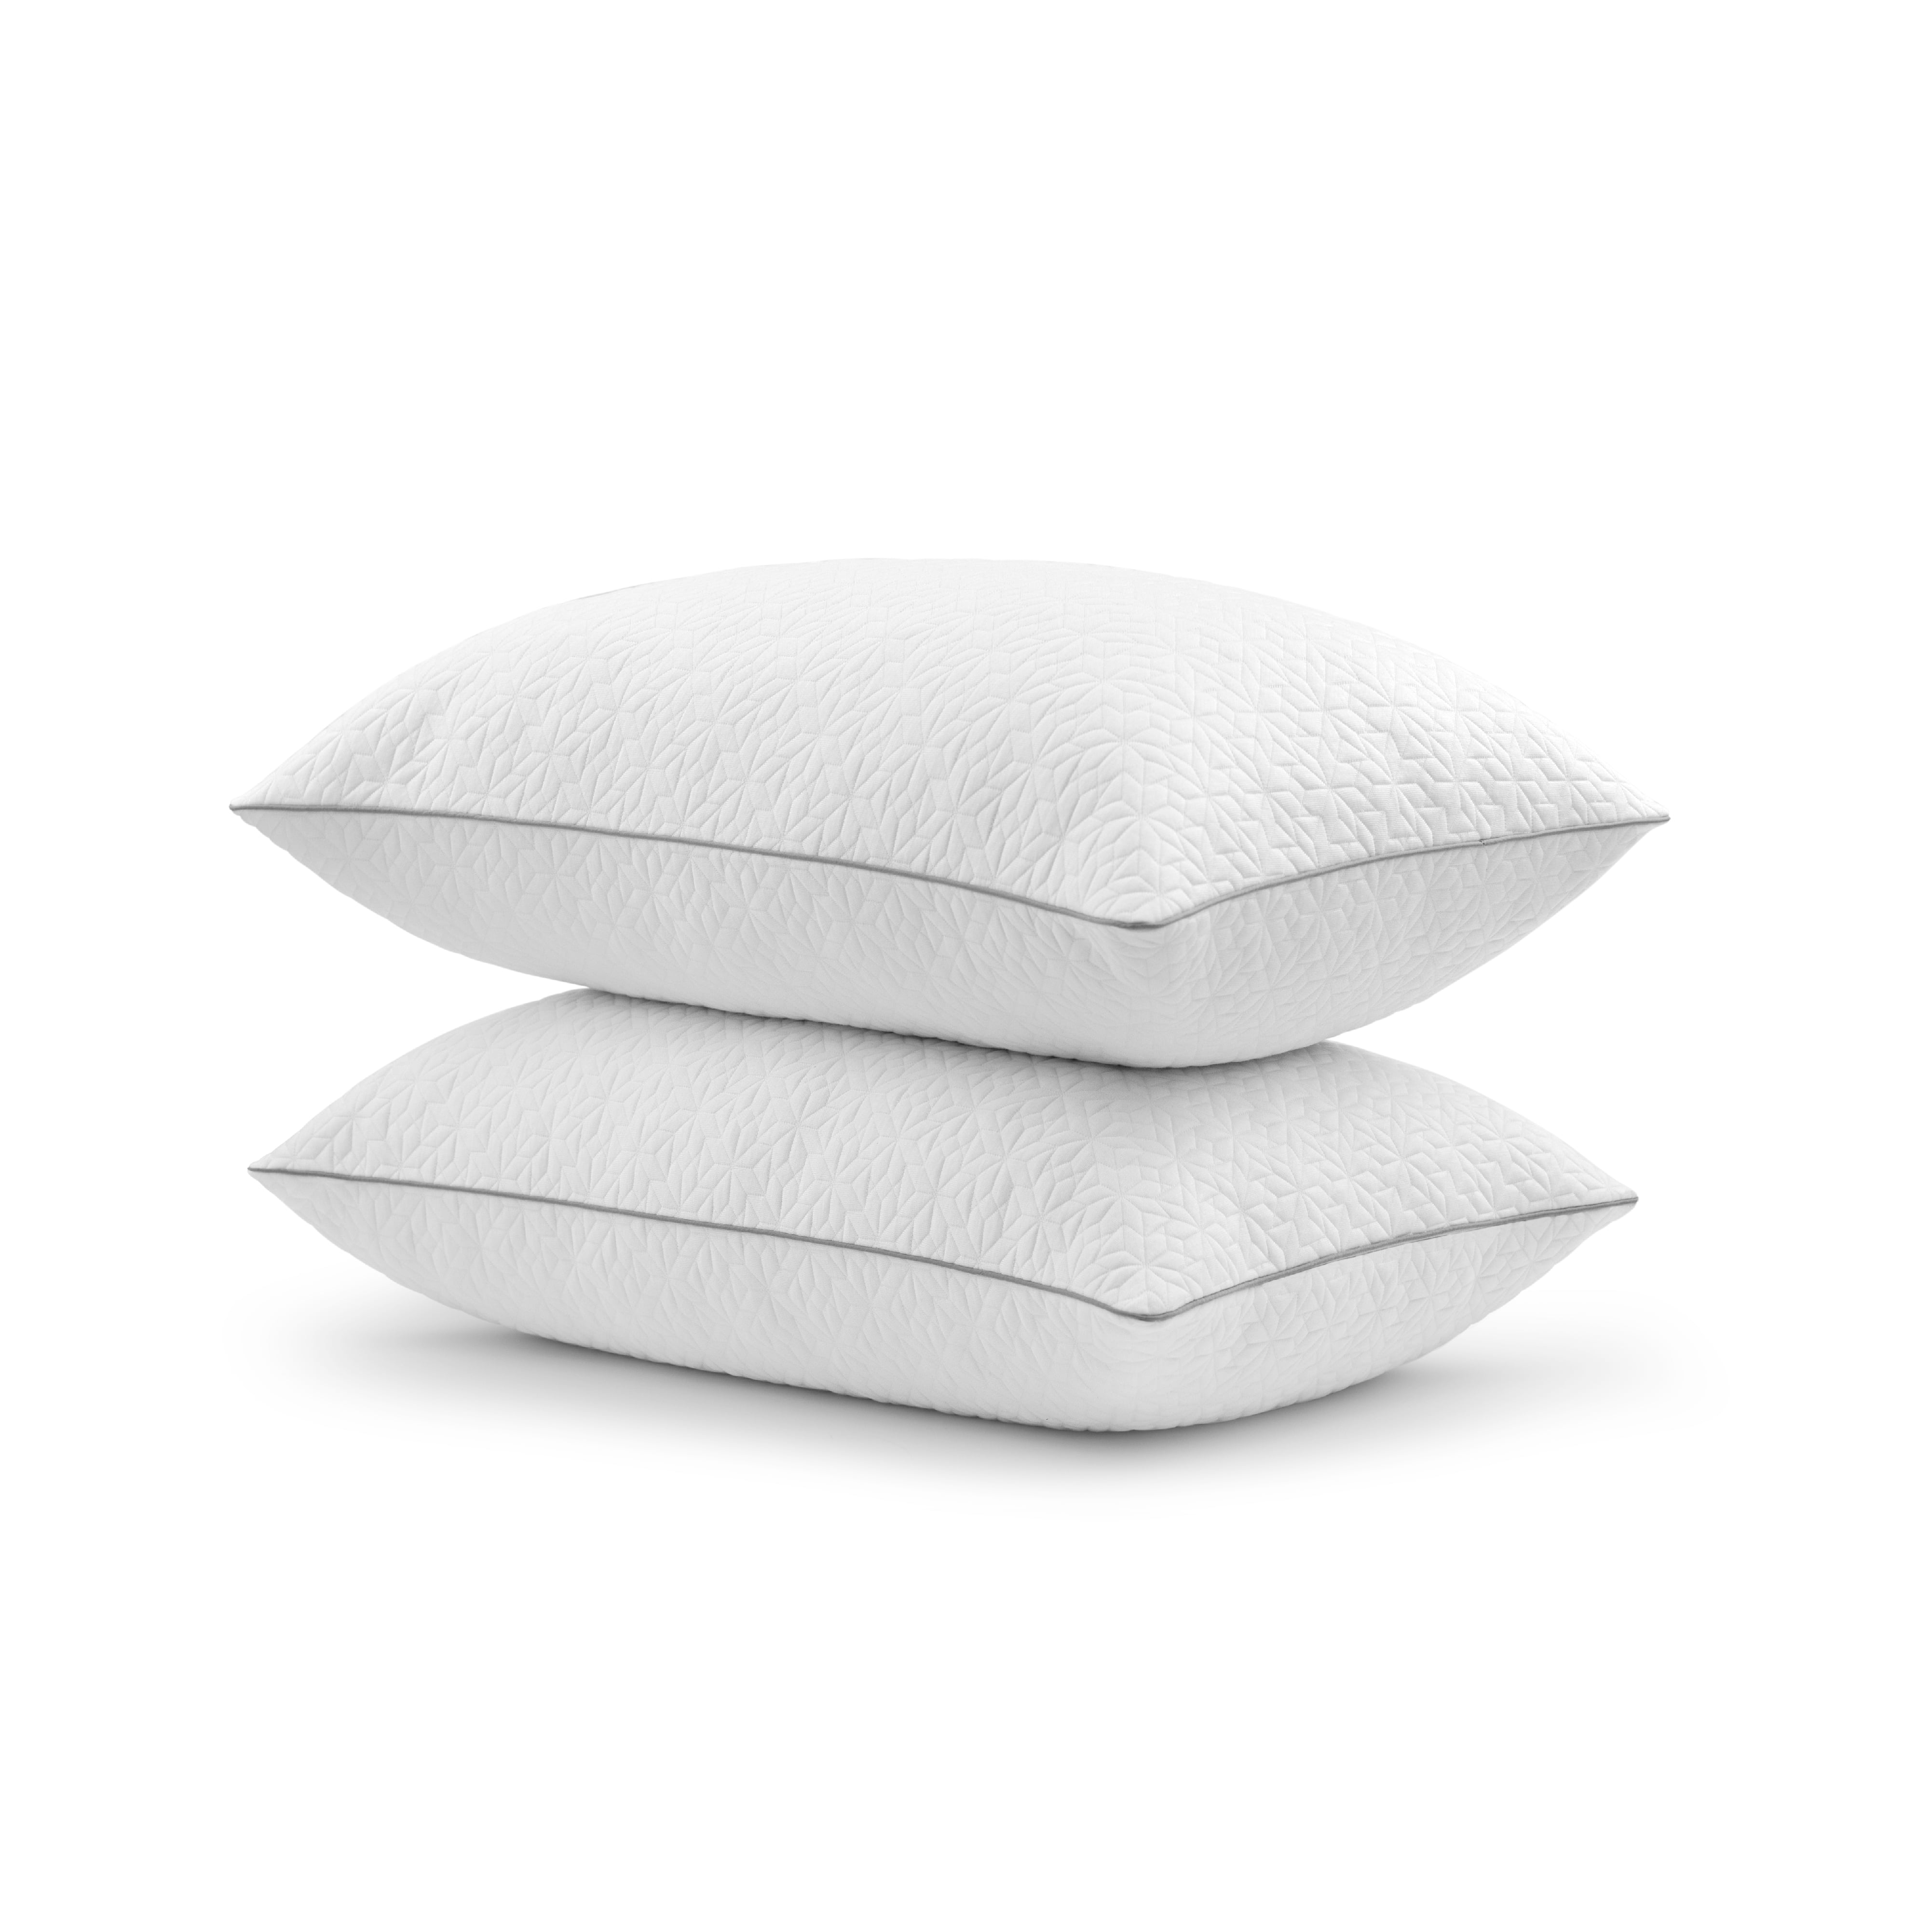 Beautyrest Coolmax Jumbo Bed Pillow Standard White 